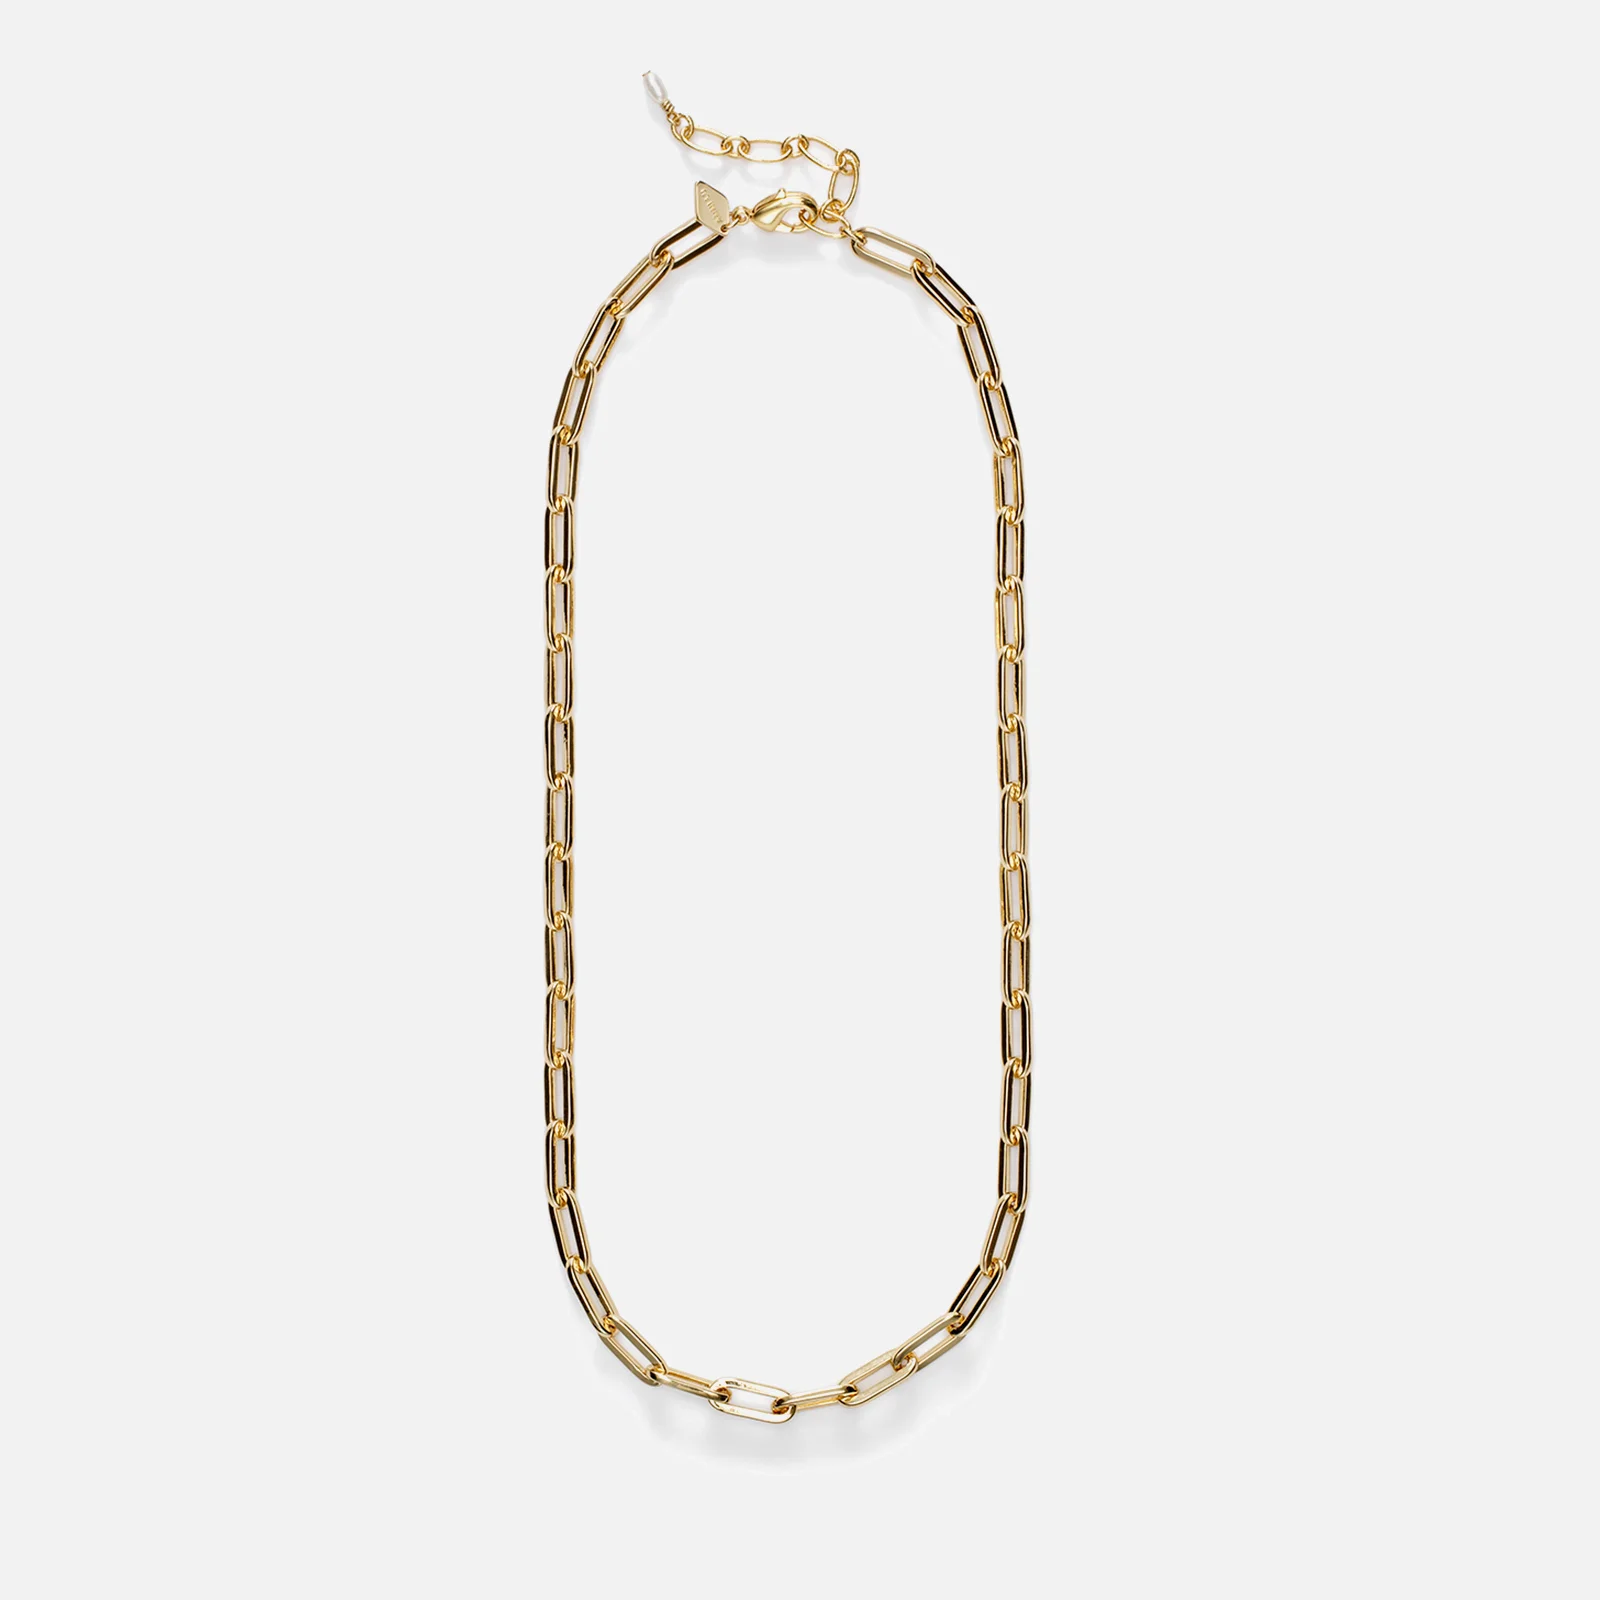 Anni Lu Golden Hour 18-Karat Gold-Plated Necklace Image 1